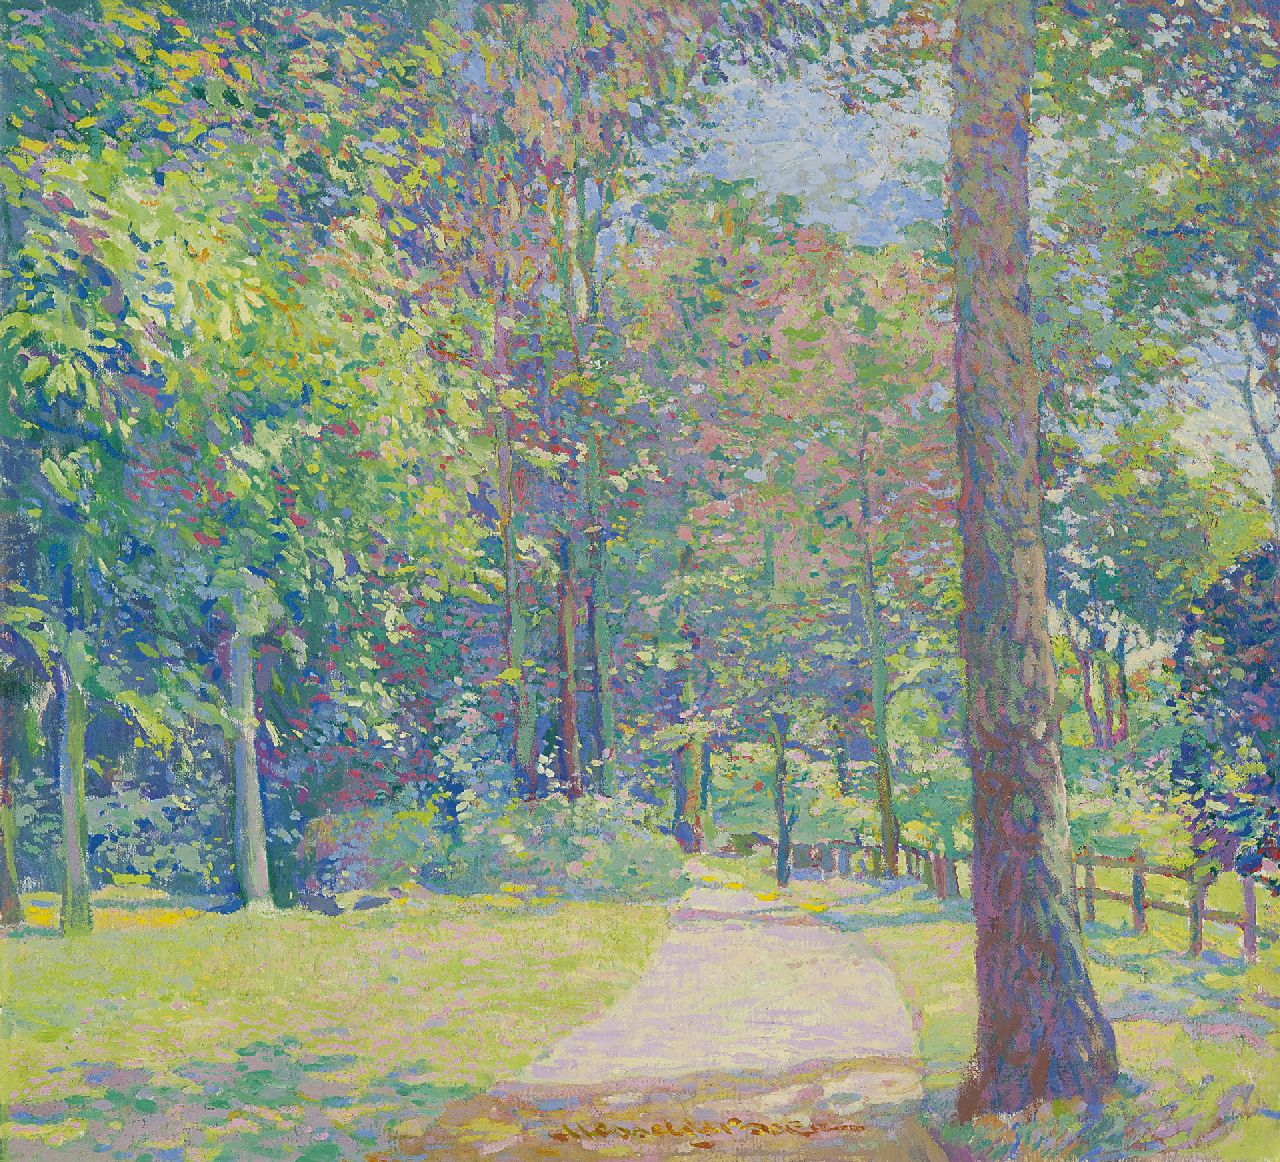 Boer H. de | Hessel de Boer, A sunny day in the park, oil on canvas 49.1 x 53.7 cm, signed l.m.